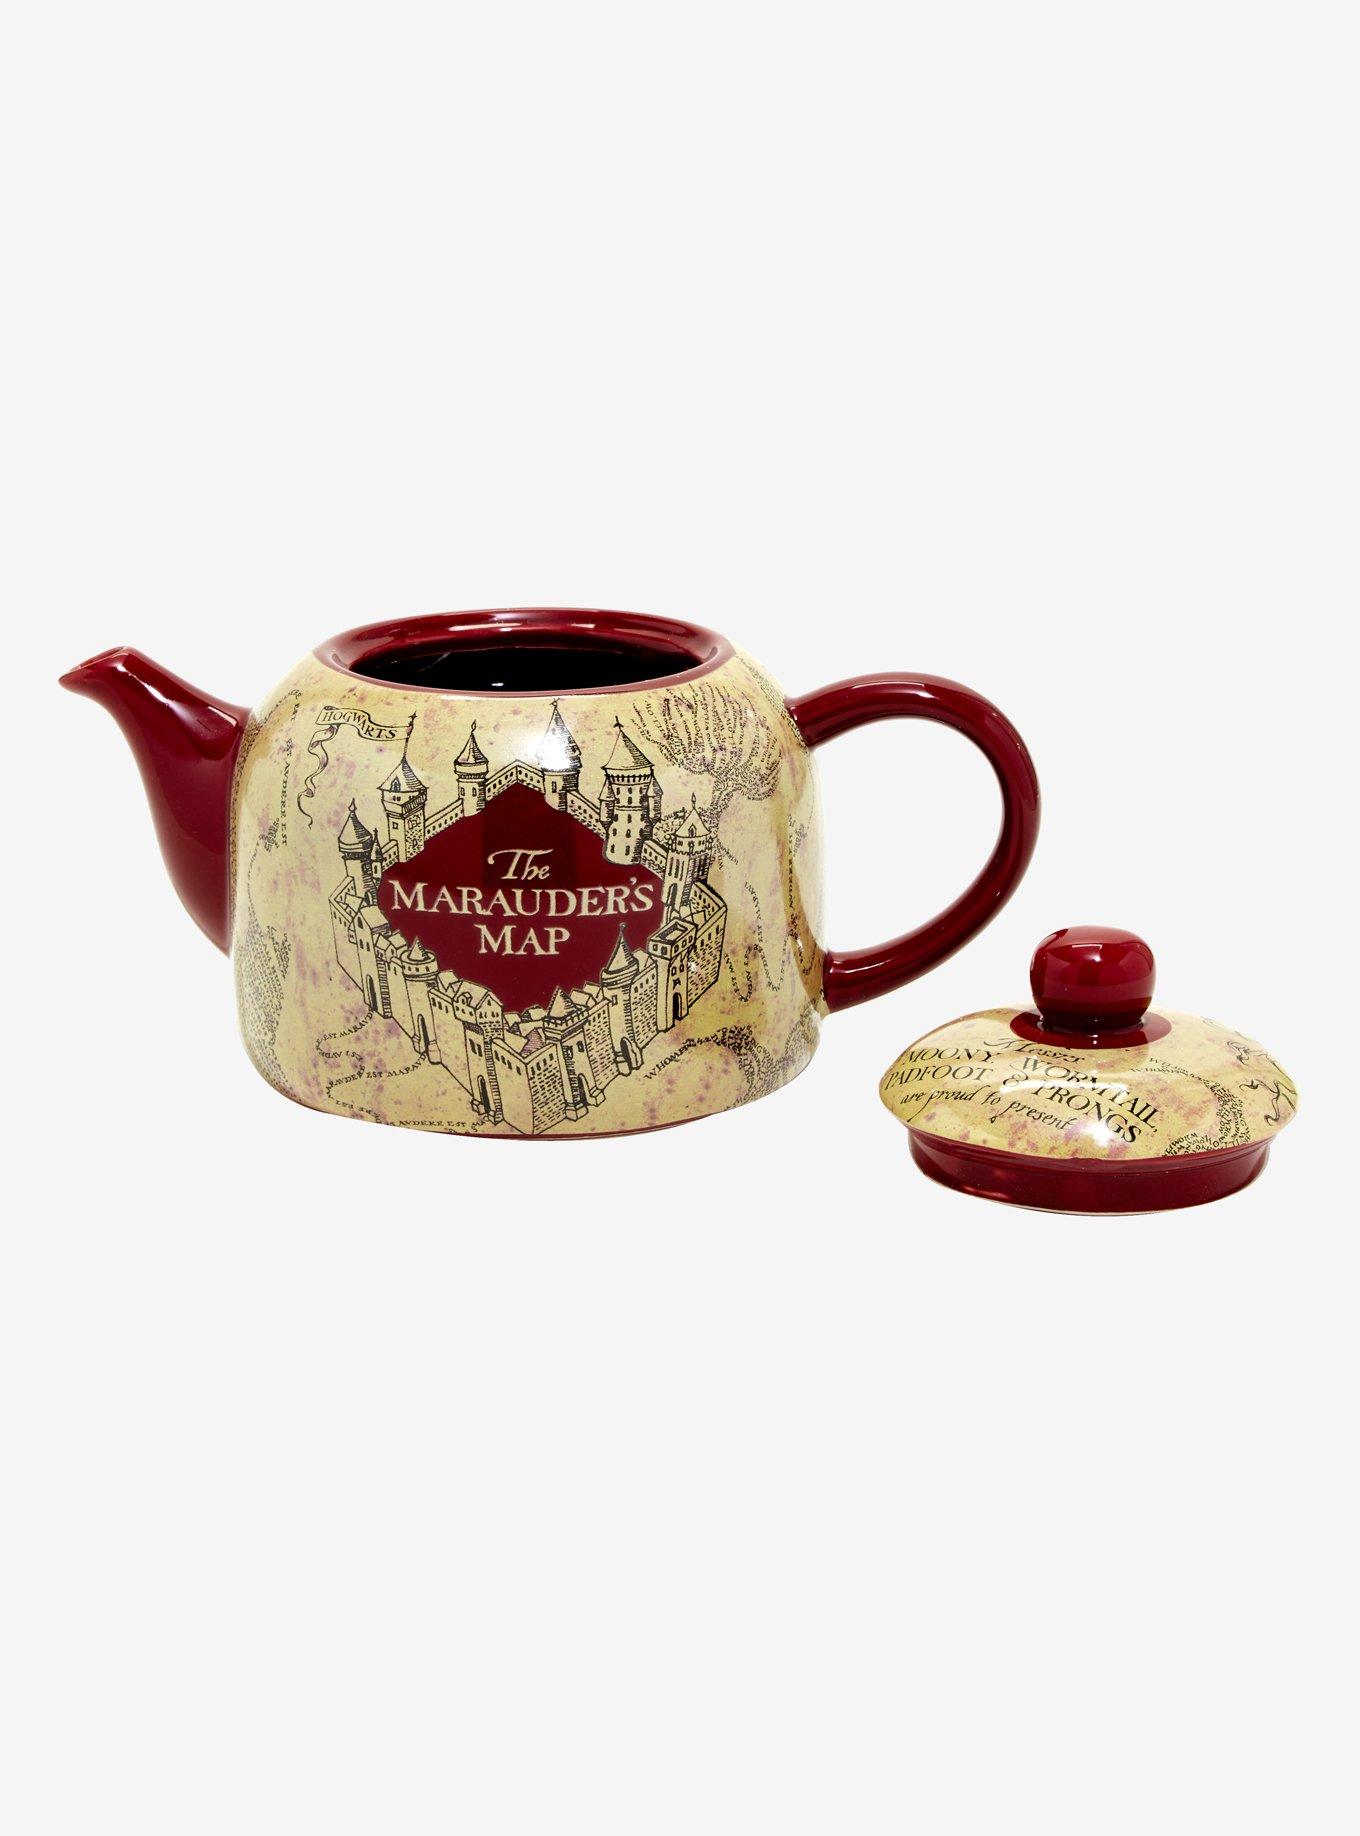 Harry Potter Marauder's Map Ceramic Teapot 